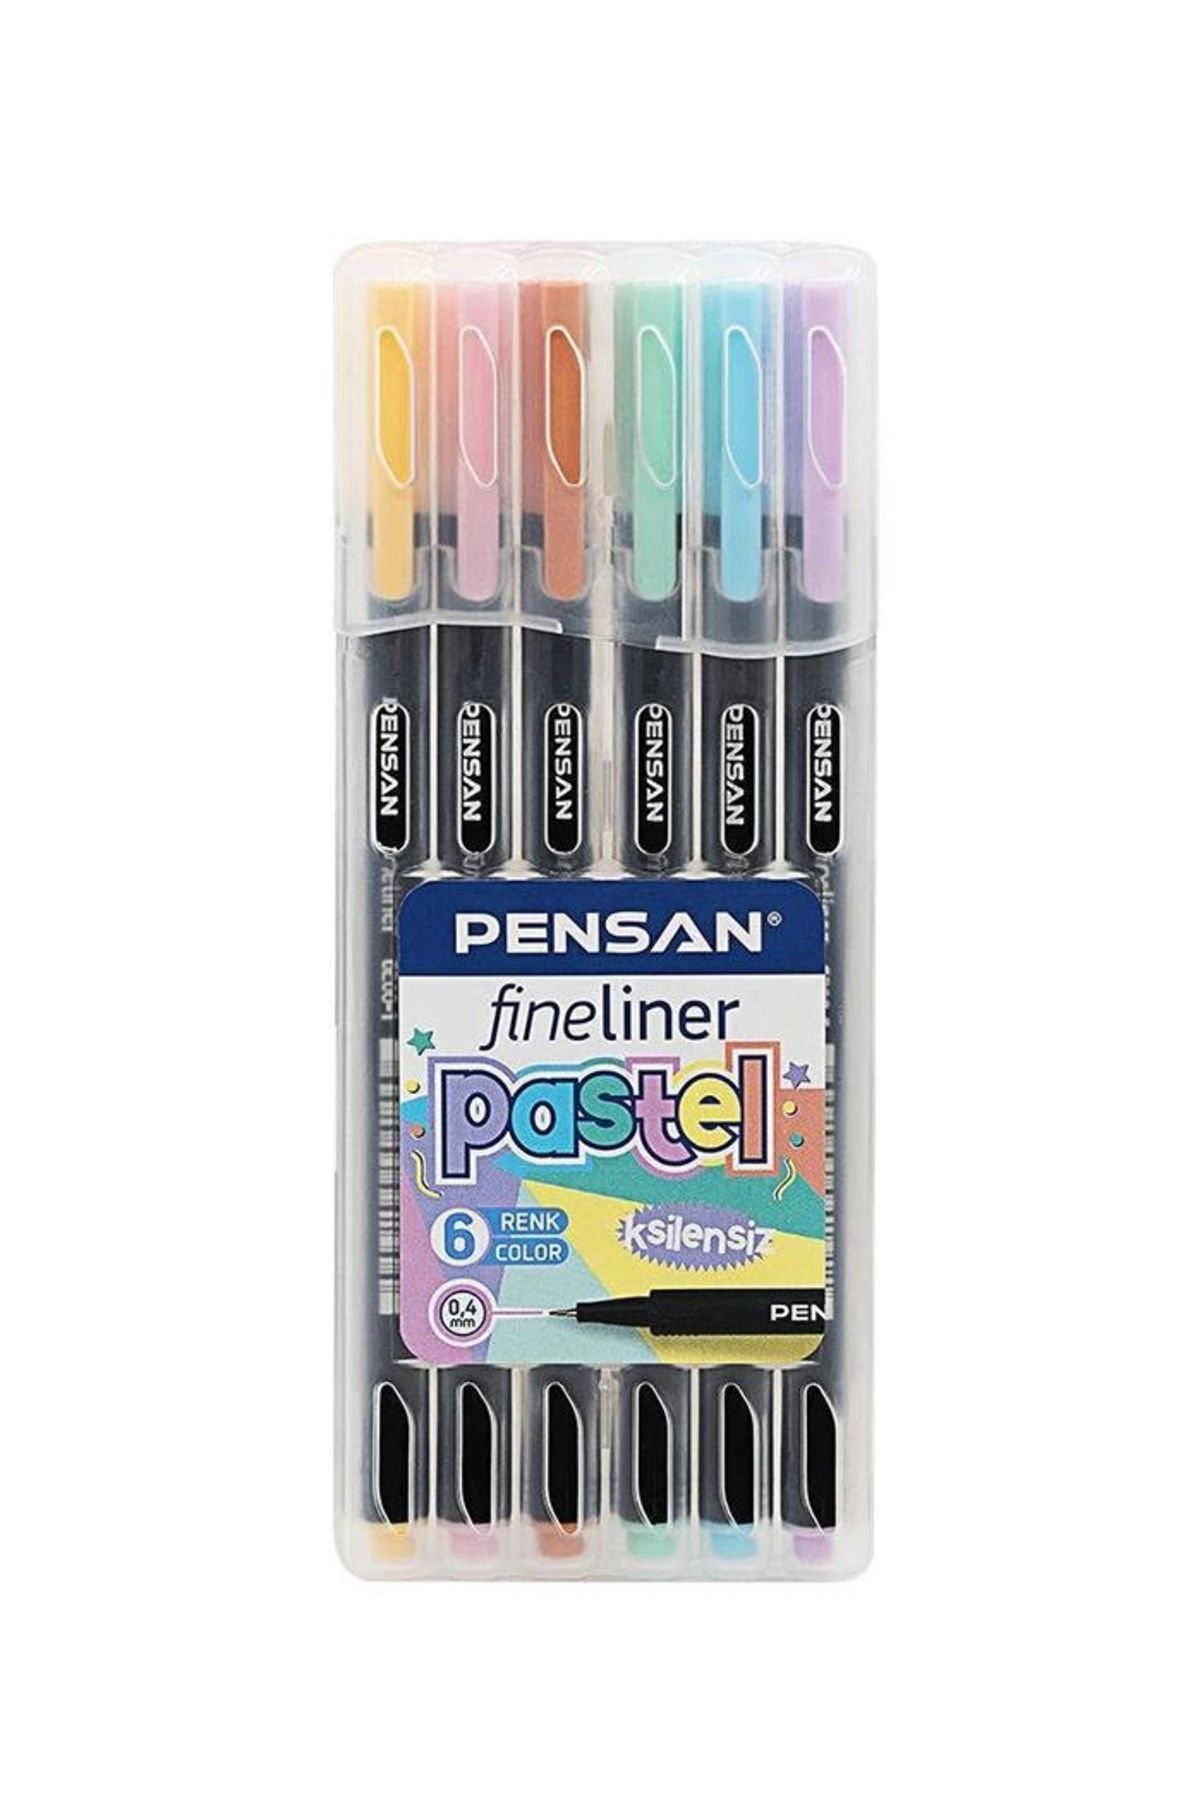 Pensan Fineliner 6 Pastel Renk 0.4mm Ince Keçe Uçlu Yazı Kalemi 1 Paket 6 Lı Pastel Fineliner Kalem Seti